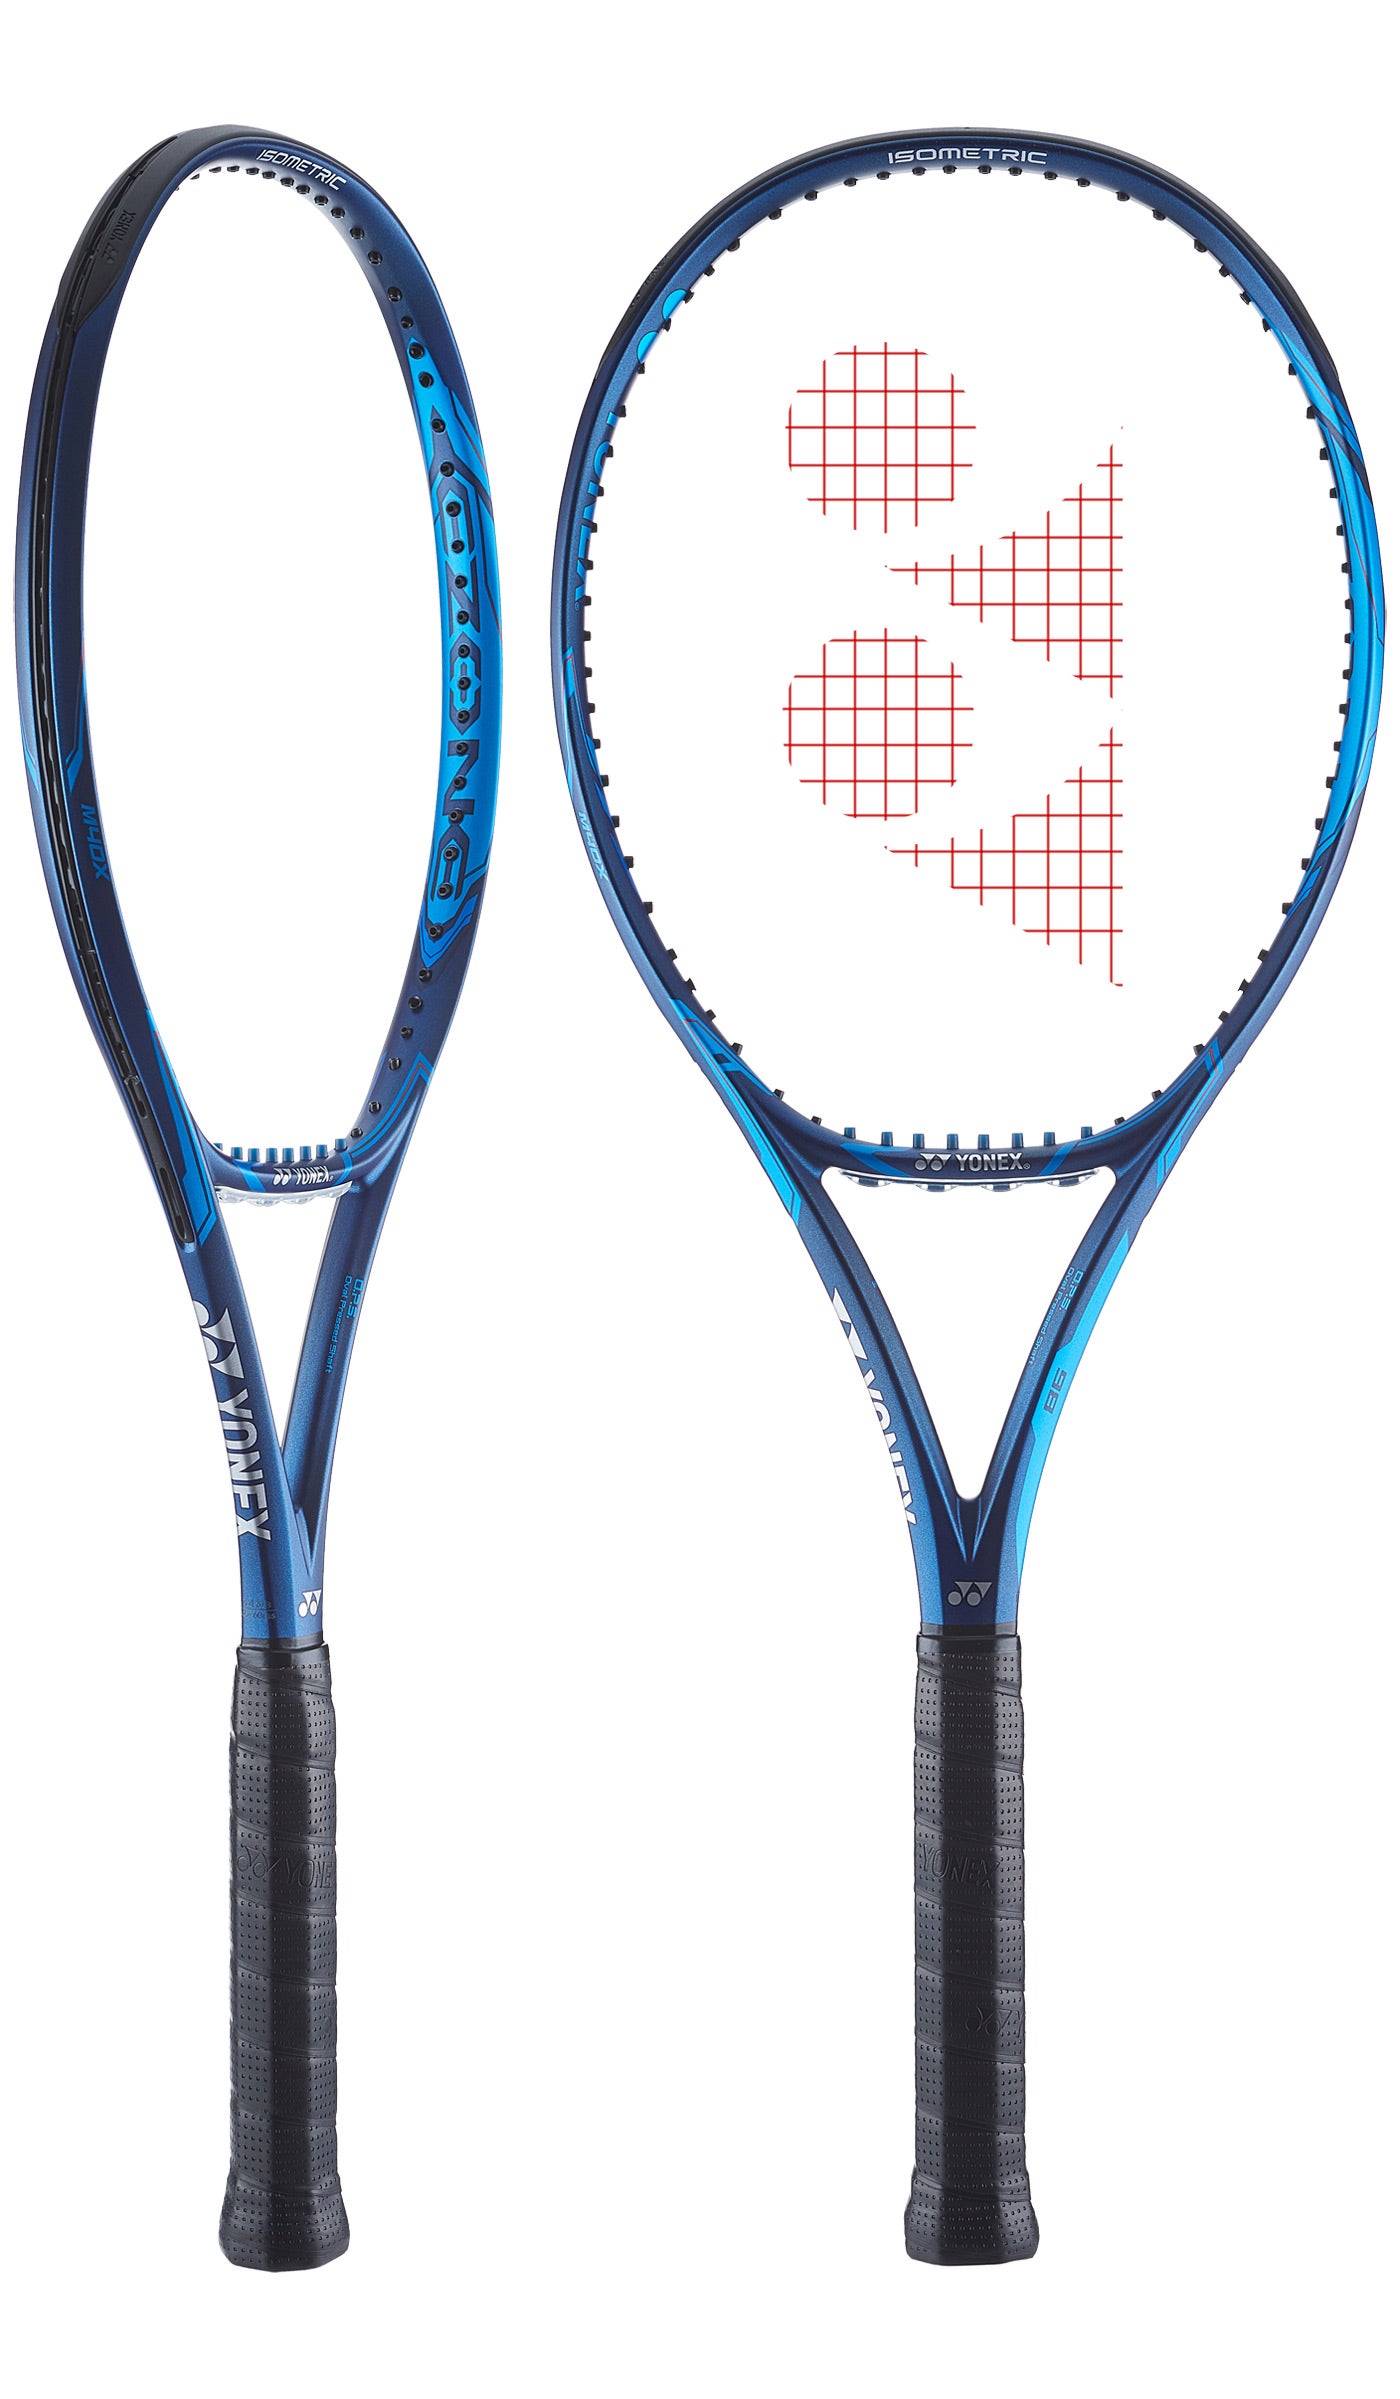 305g Yonex Ezone 98 Limited Edition Gold Tennis Racquet 